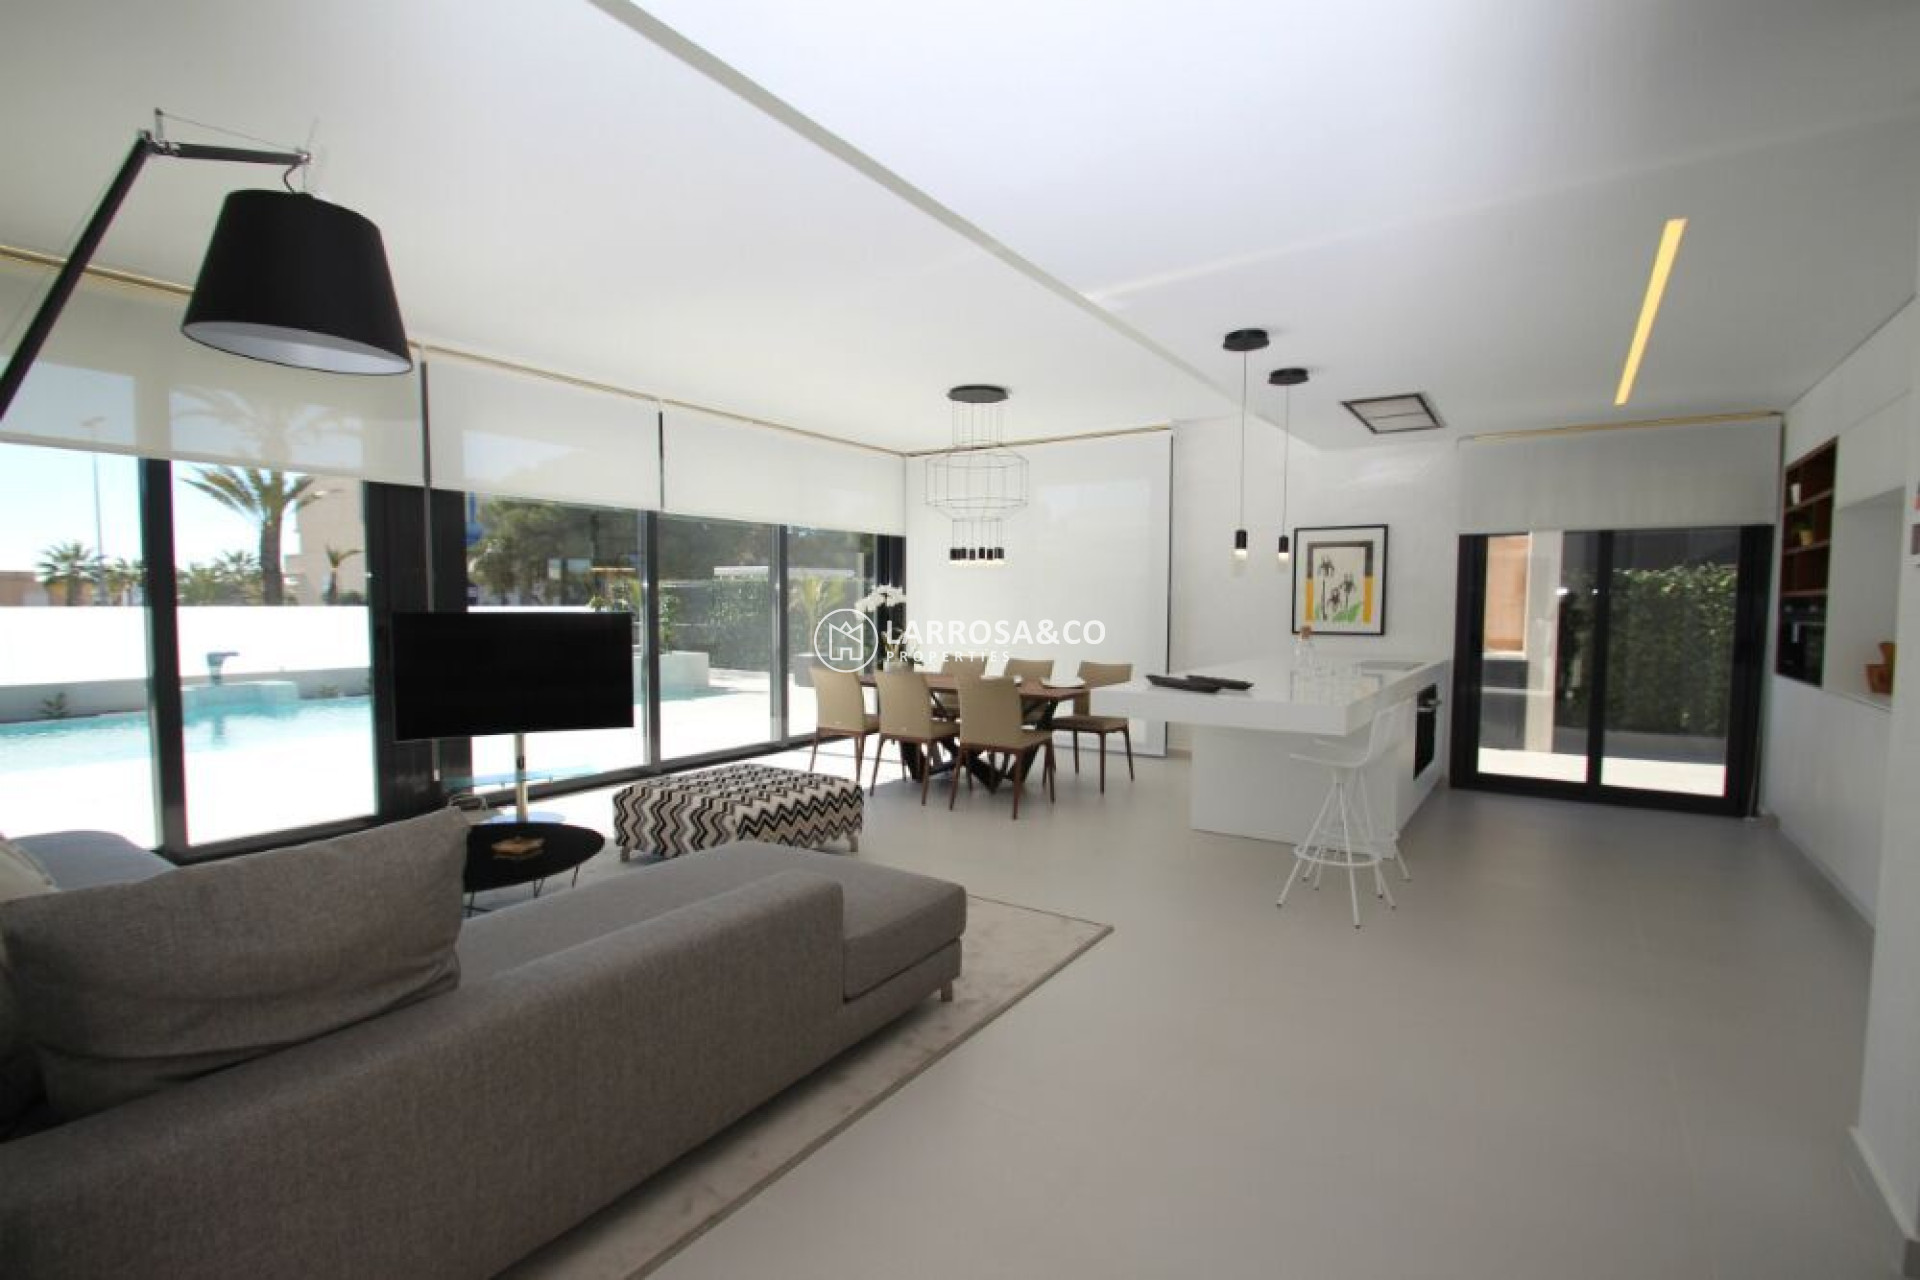 new-build-villa-sanmiguel-living-room-on2119